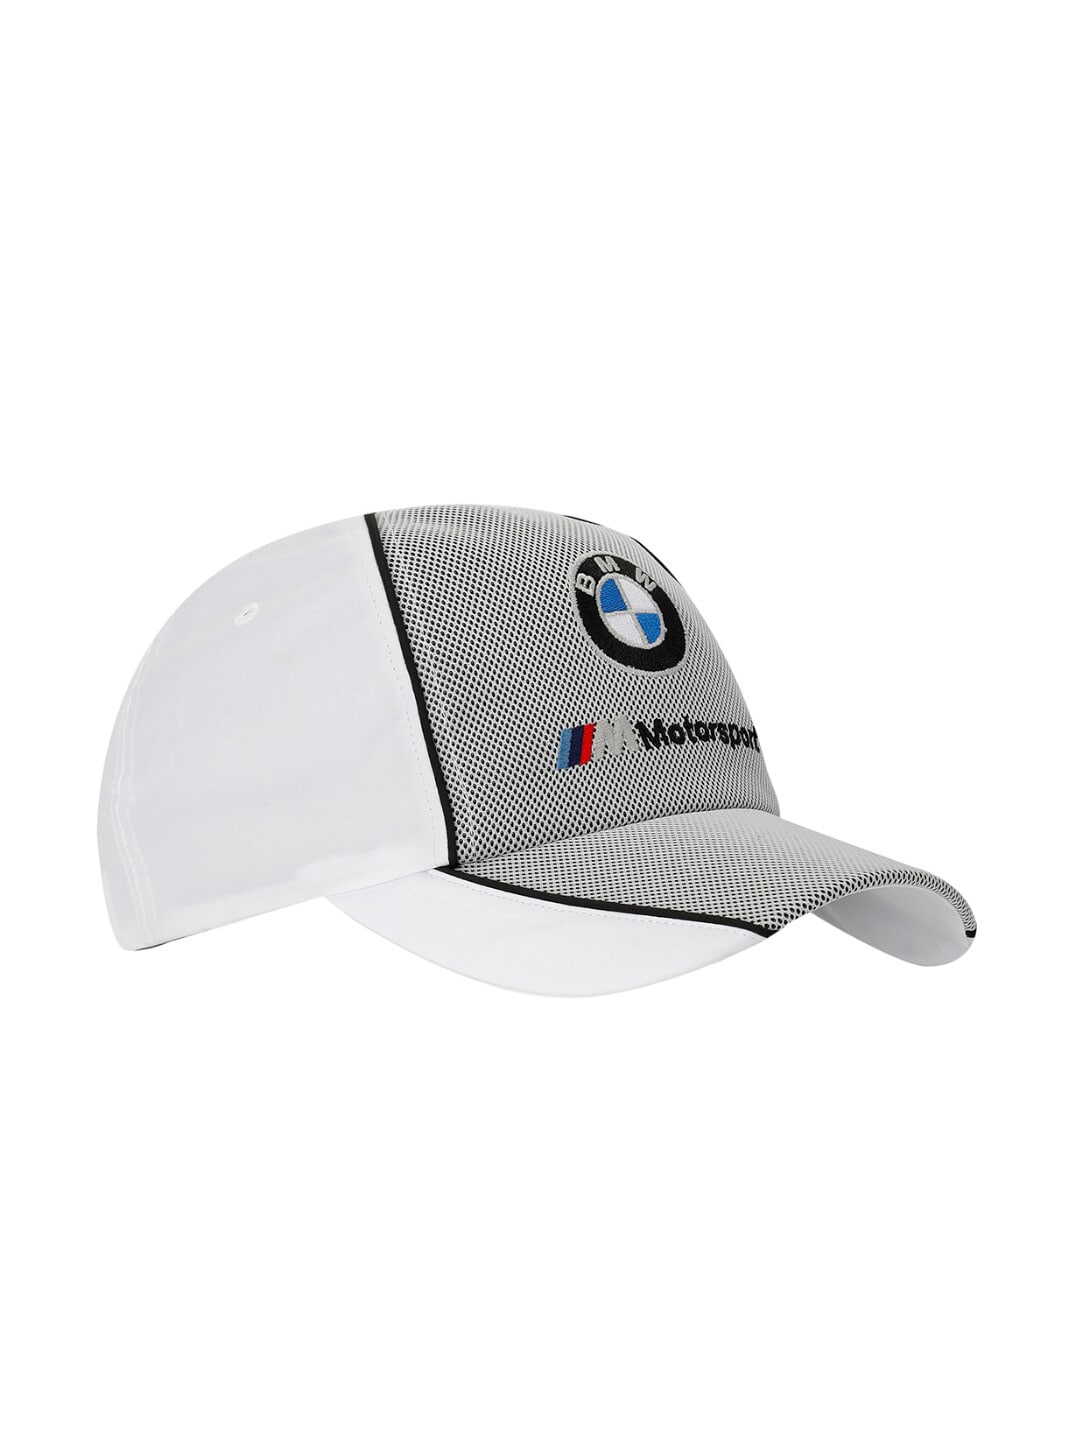 Puma Unisex White & Grey BMW M Motorsport Baseball Cap Price in India